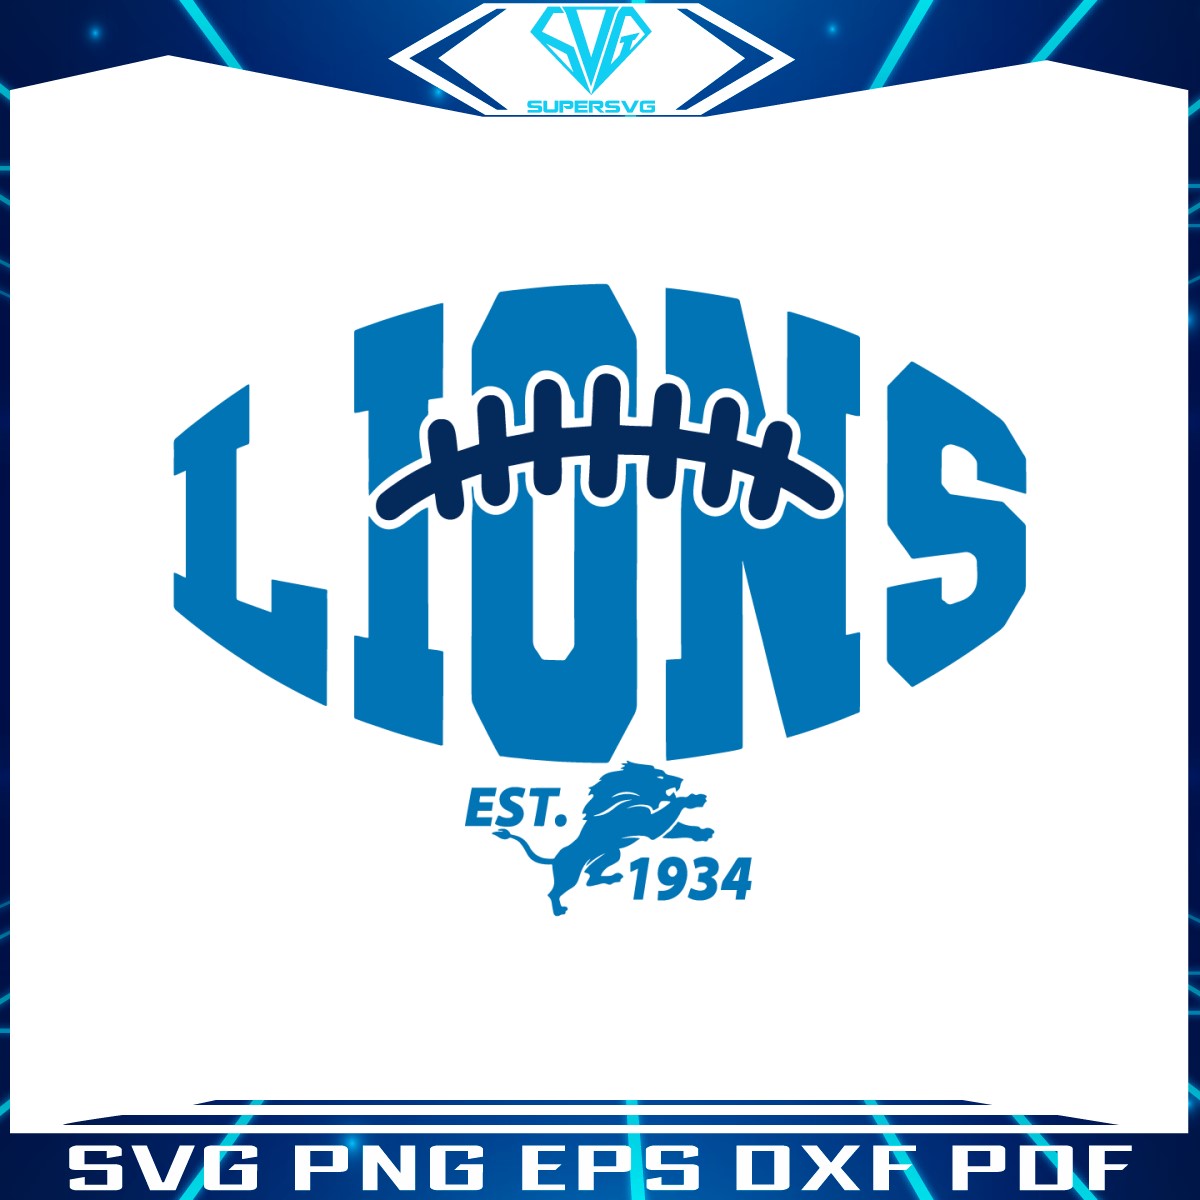 football-nfl-lions-est-1934-svg